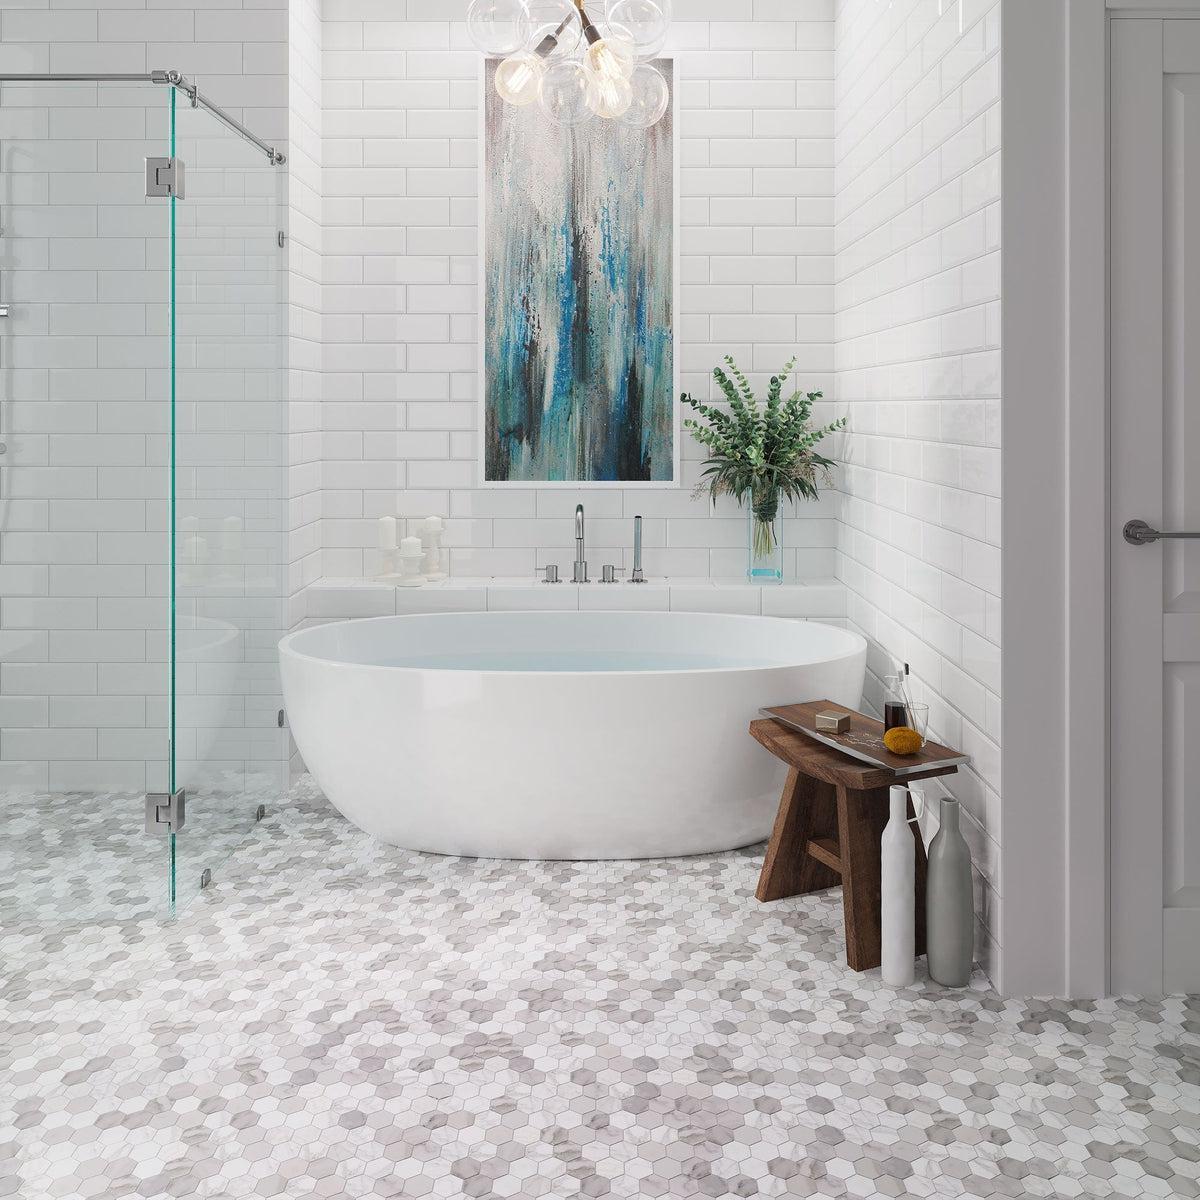 Calacatta Gold Hexagon Polished Tile in White Bathroom